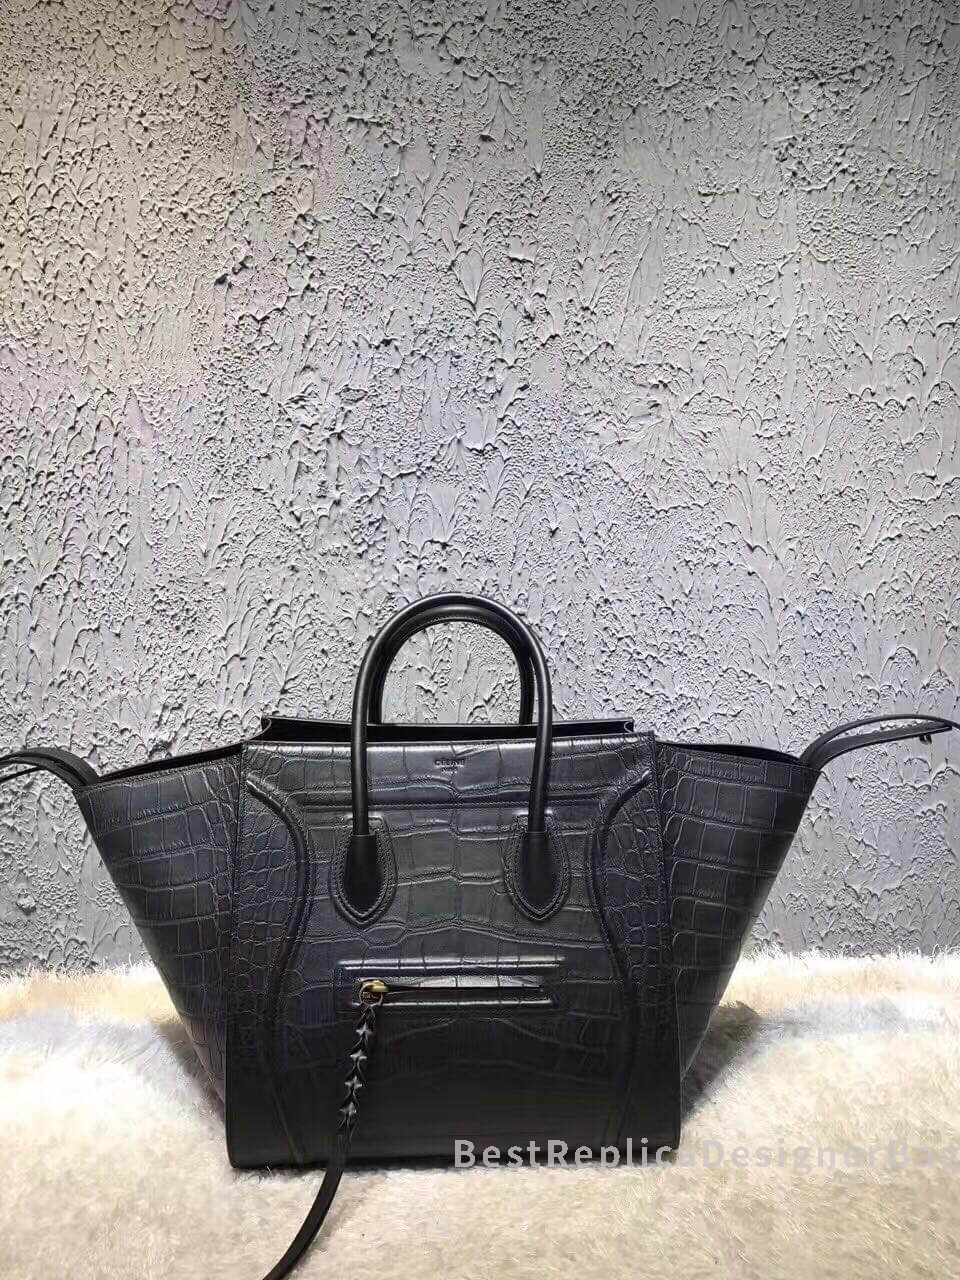 Celine Luggage Phantom Bag In Black Croc Embossed Leather